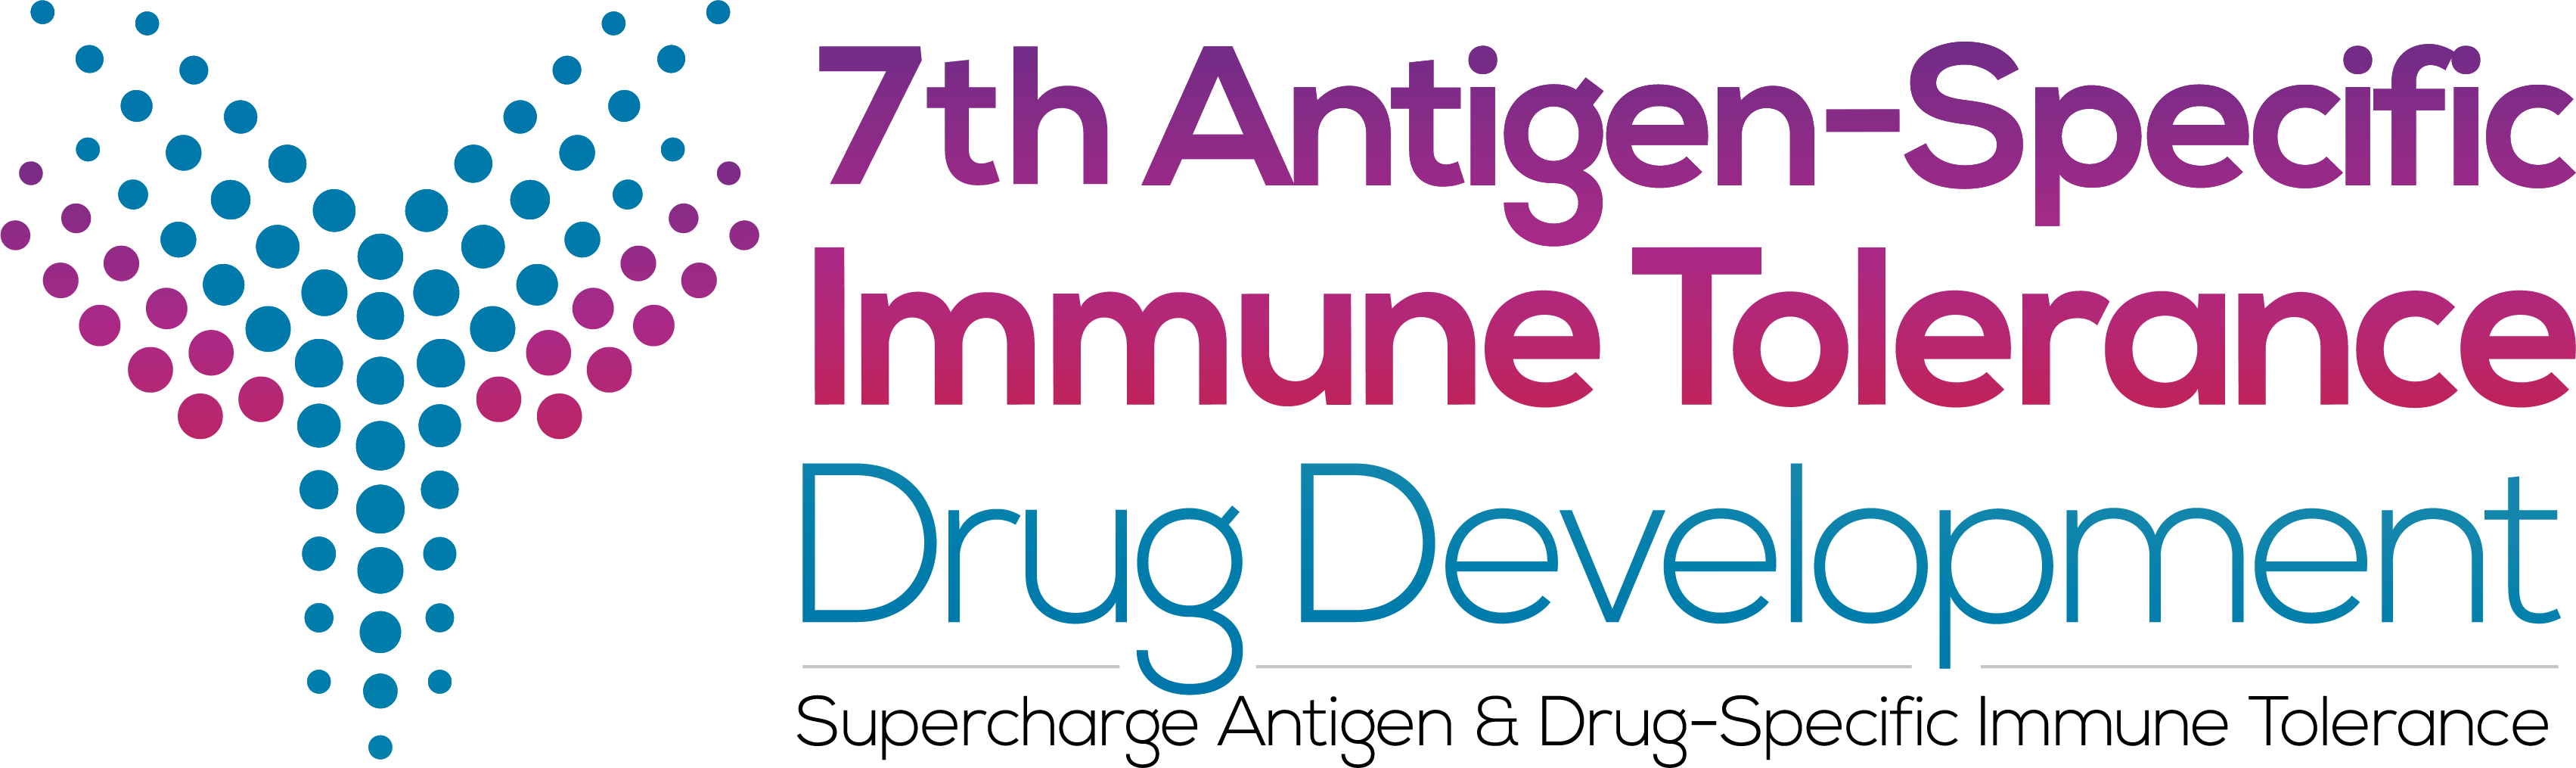 HW230928 7th Antigen-Specific Immune Tolerance Summit logo